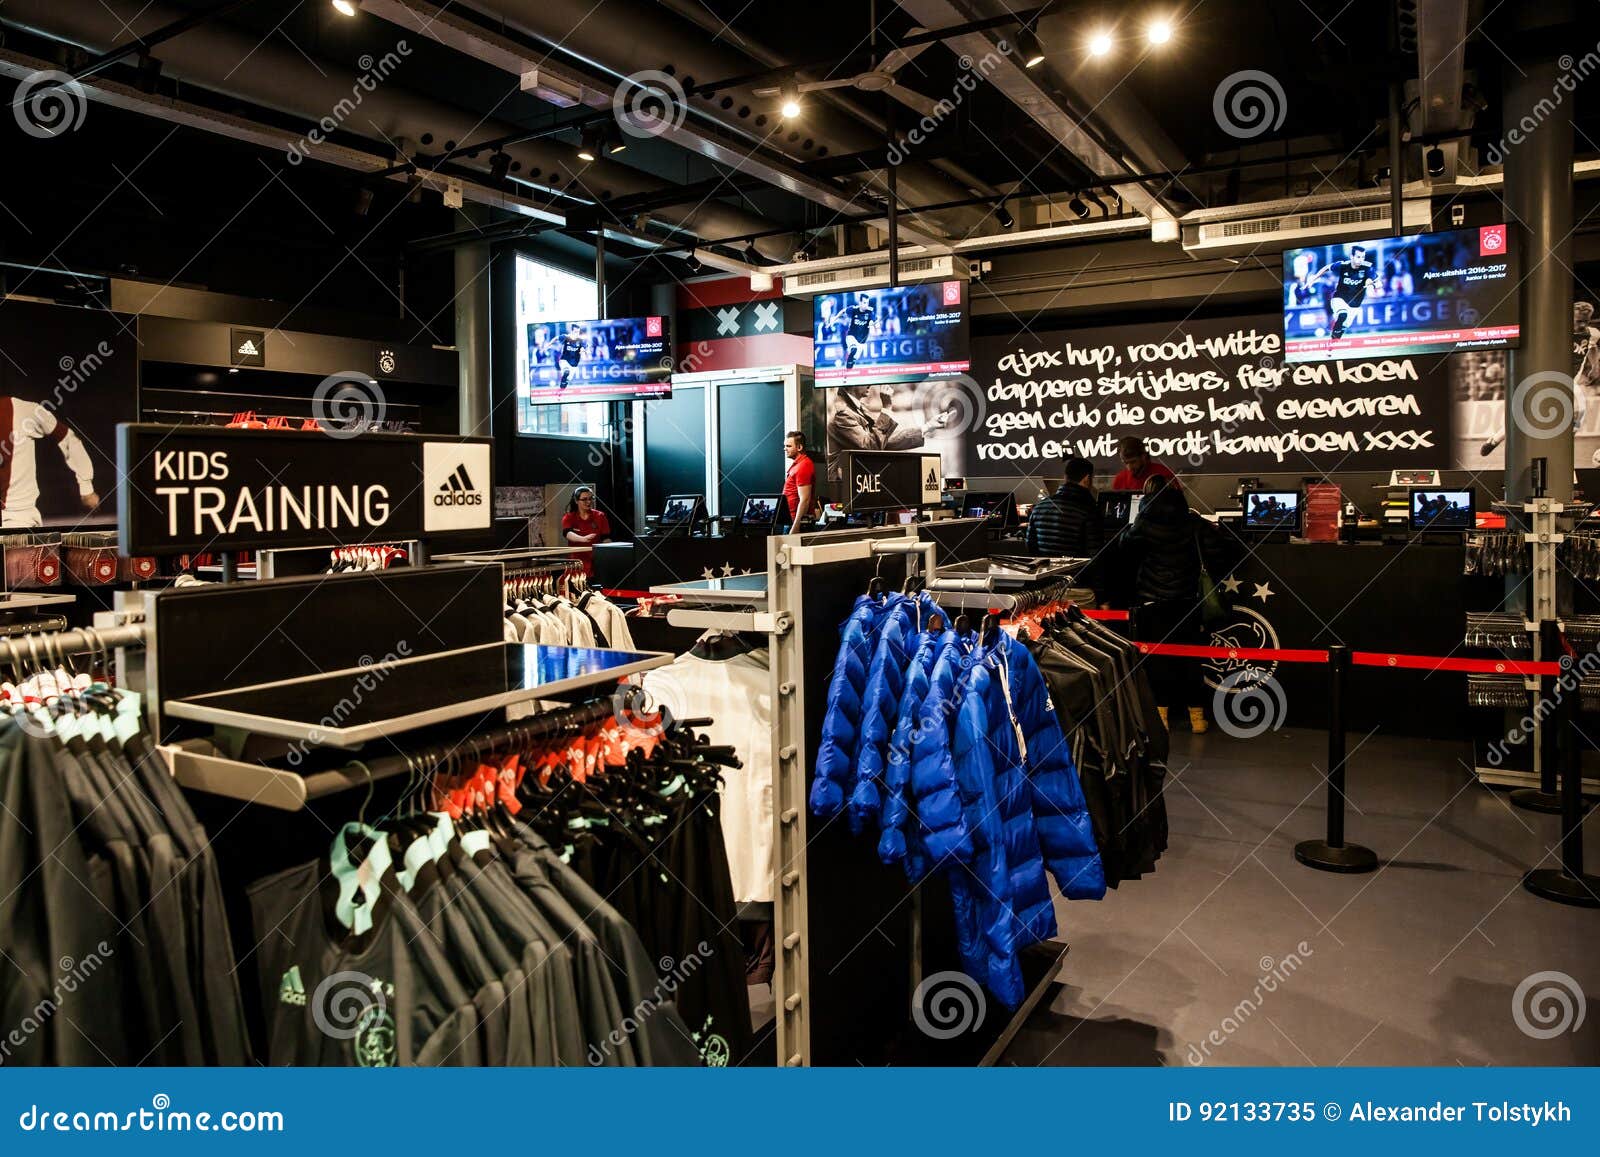 Ajax Fotball Club Shop Interior on Amsterdam Arena, Editorial Image - of football: 92133735